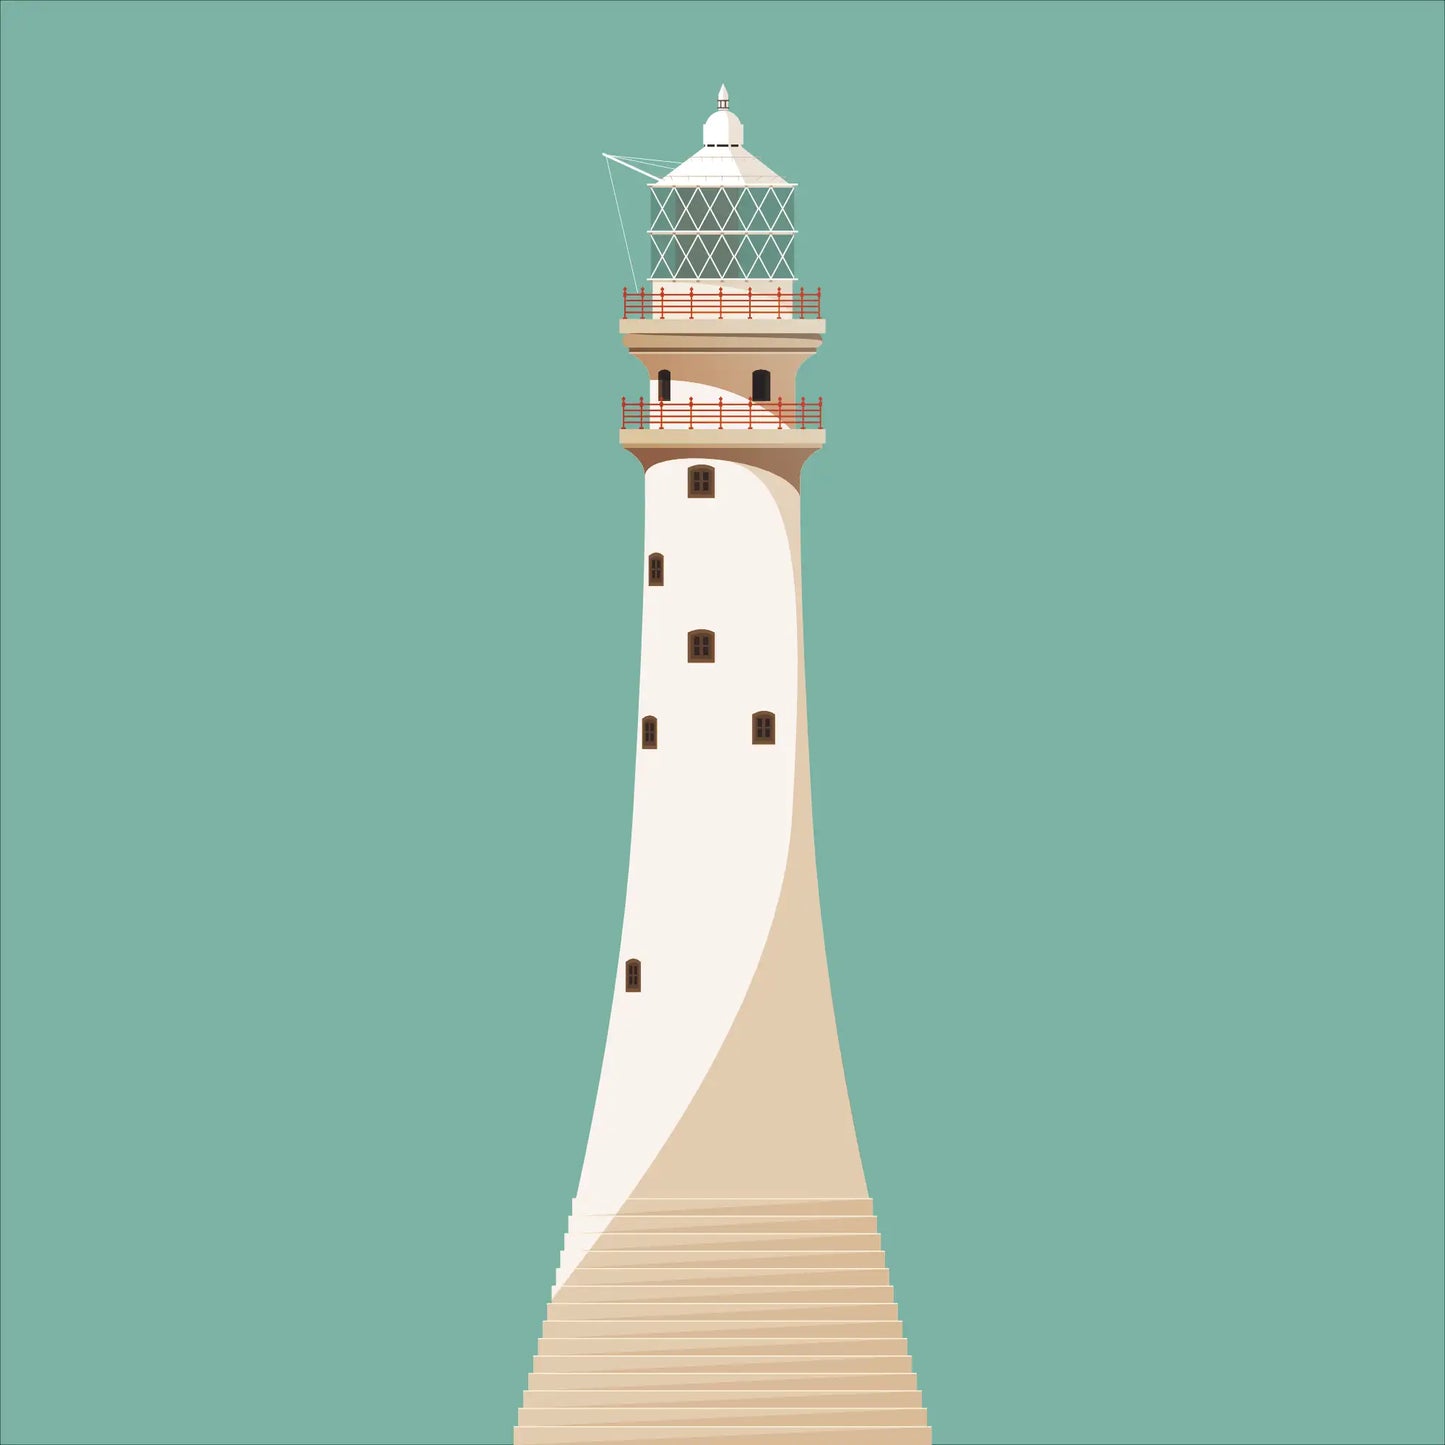 Illustration of Fastnet lighthouse on a white background inside light blue square.